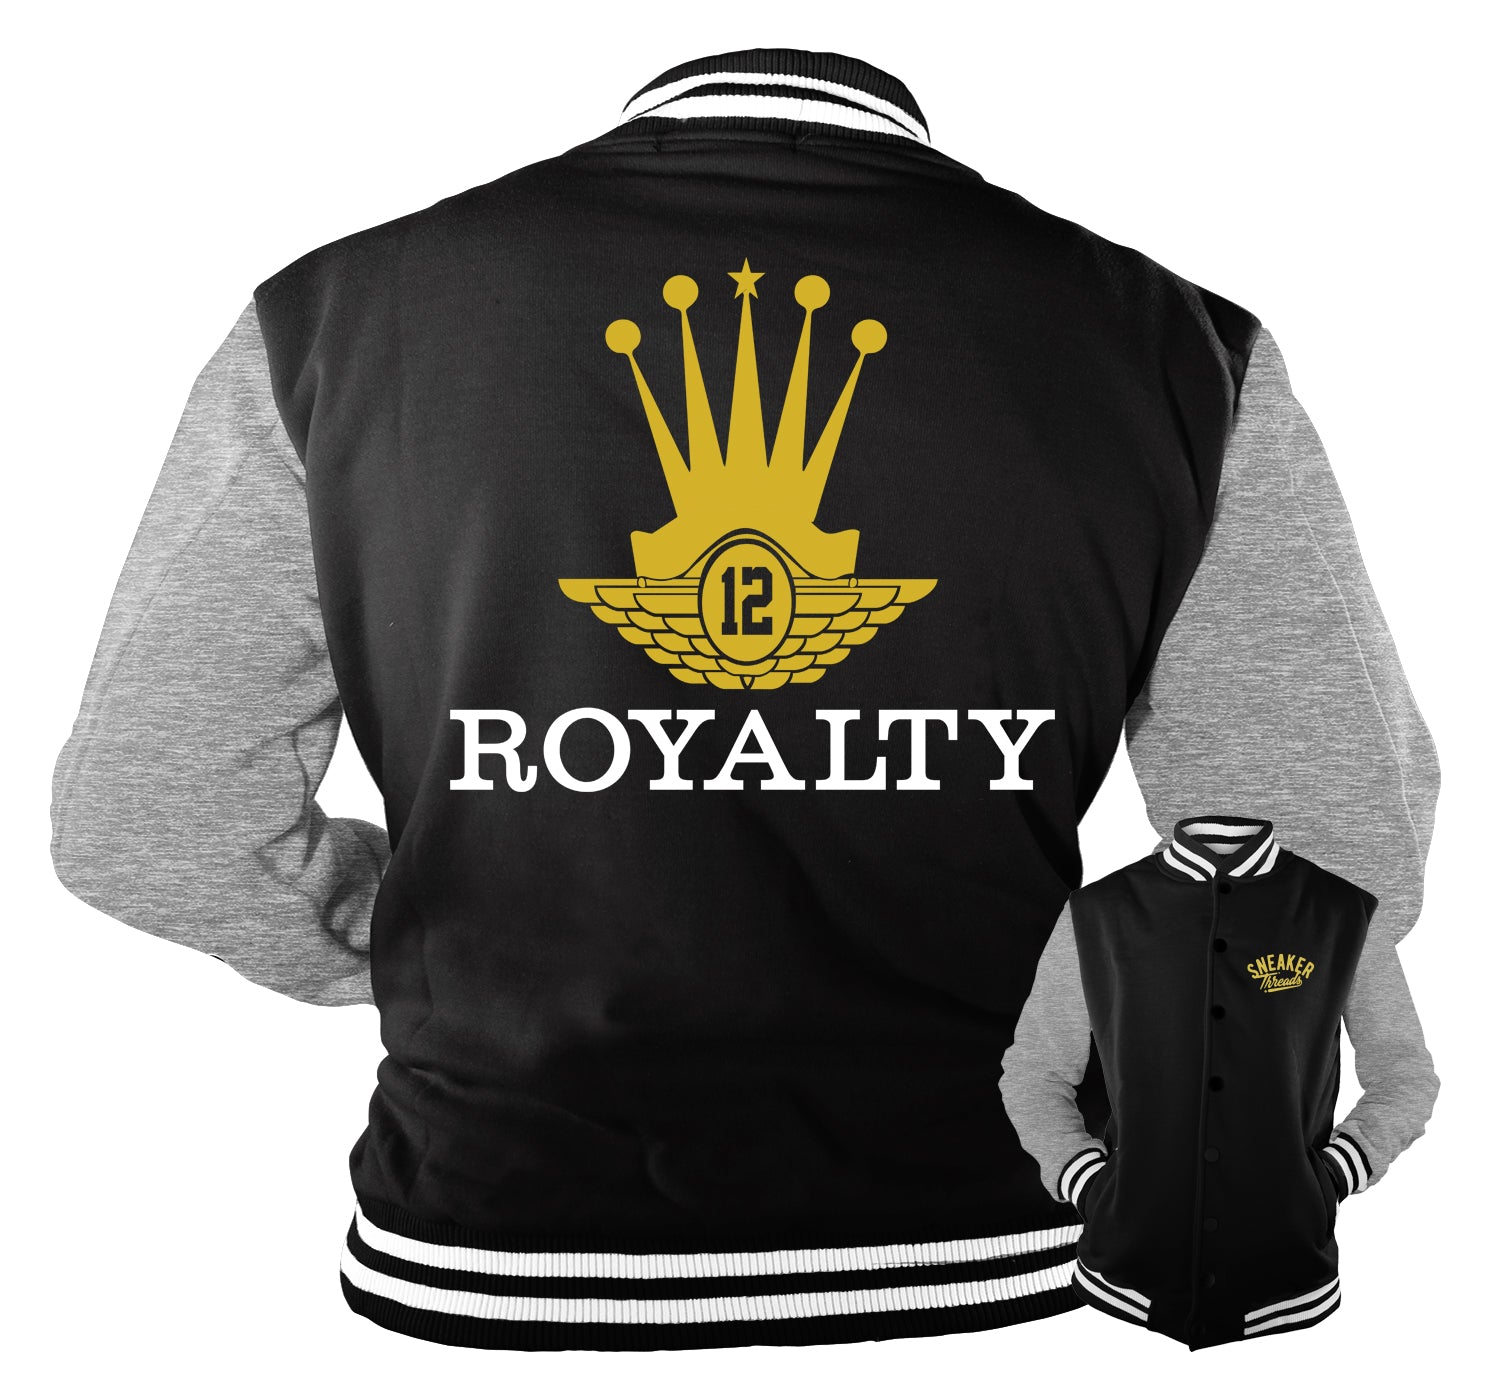 Retro 12 Royalty Jacket - Royalty - Black